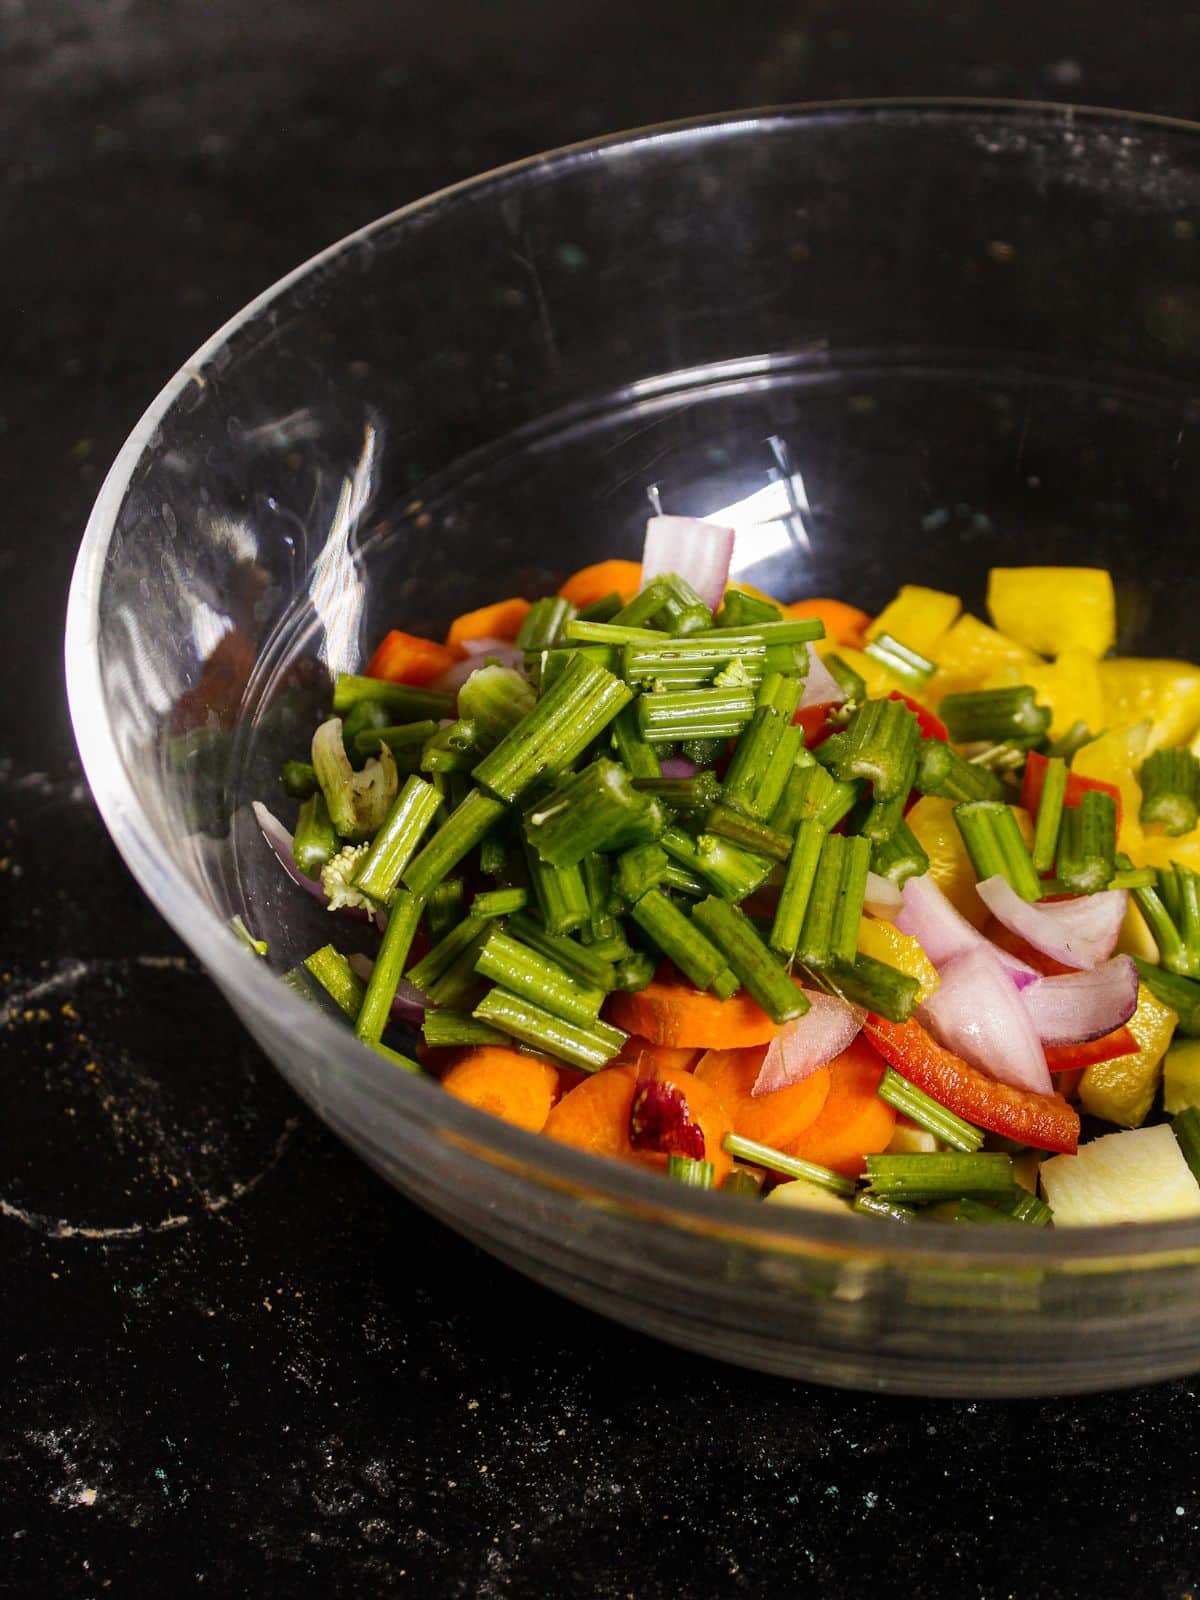 Add chopped Celery stalks into the bowl 